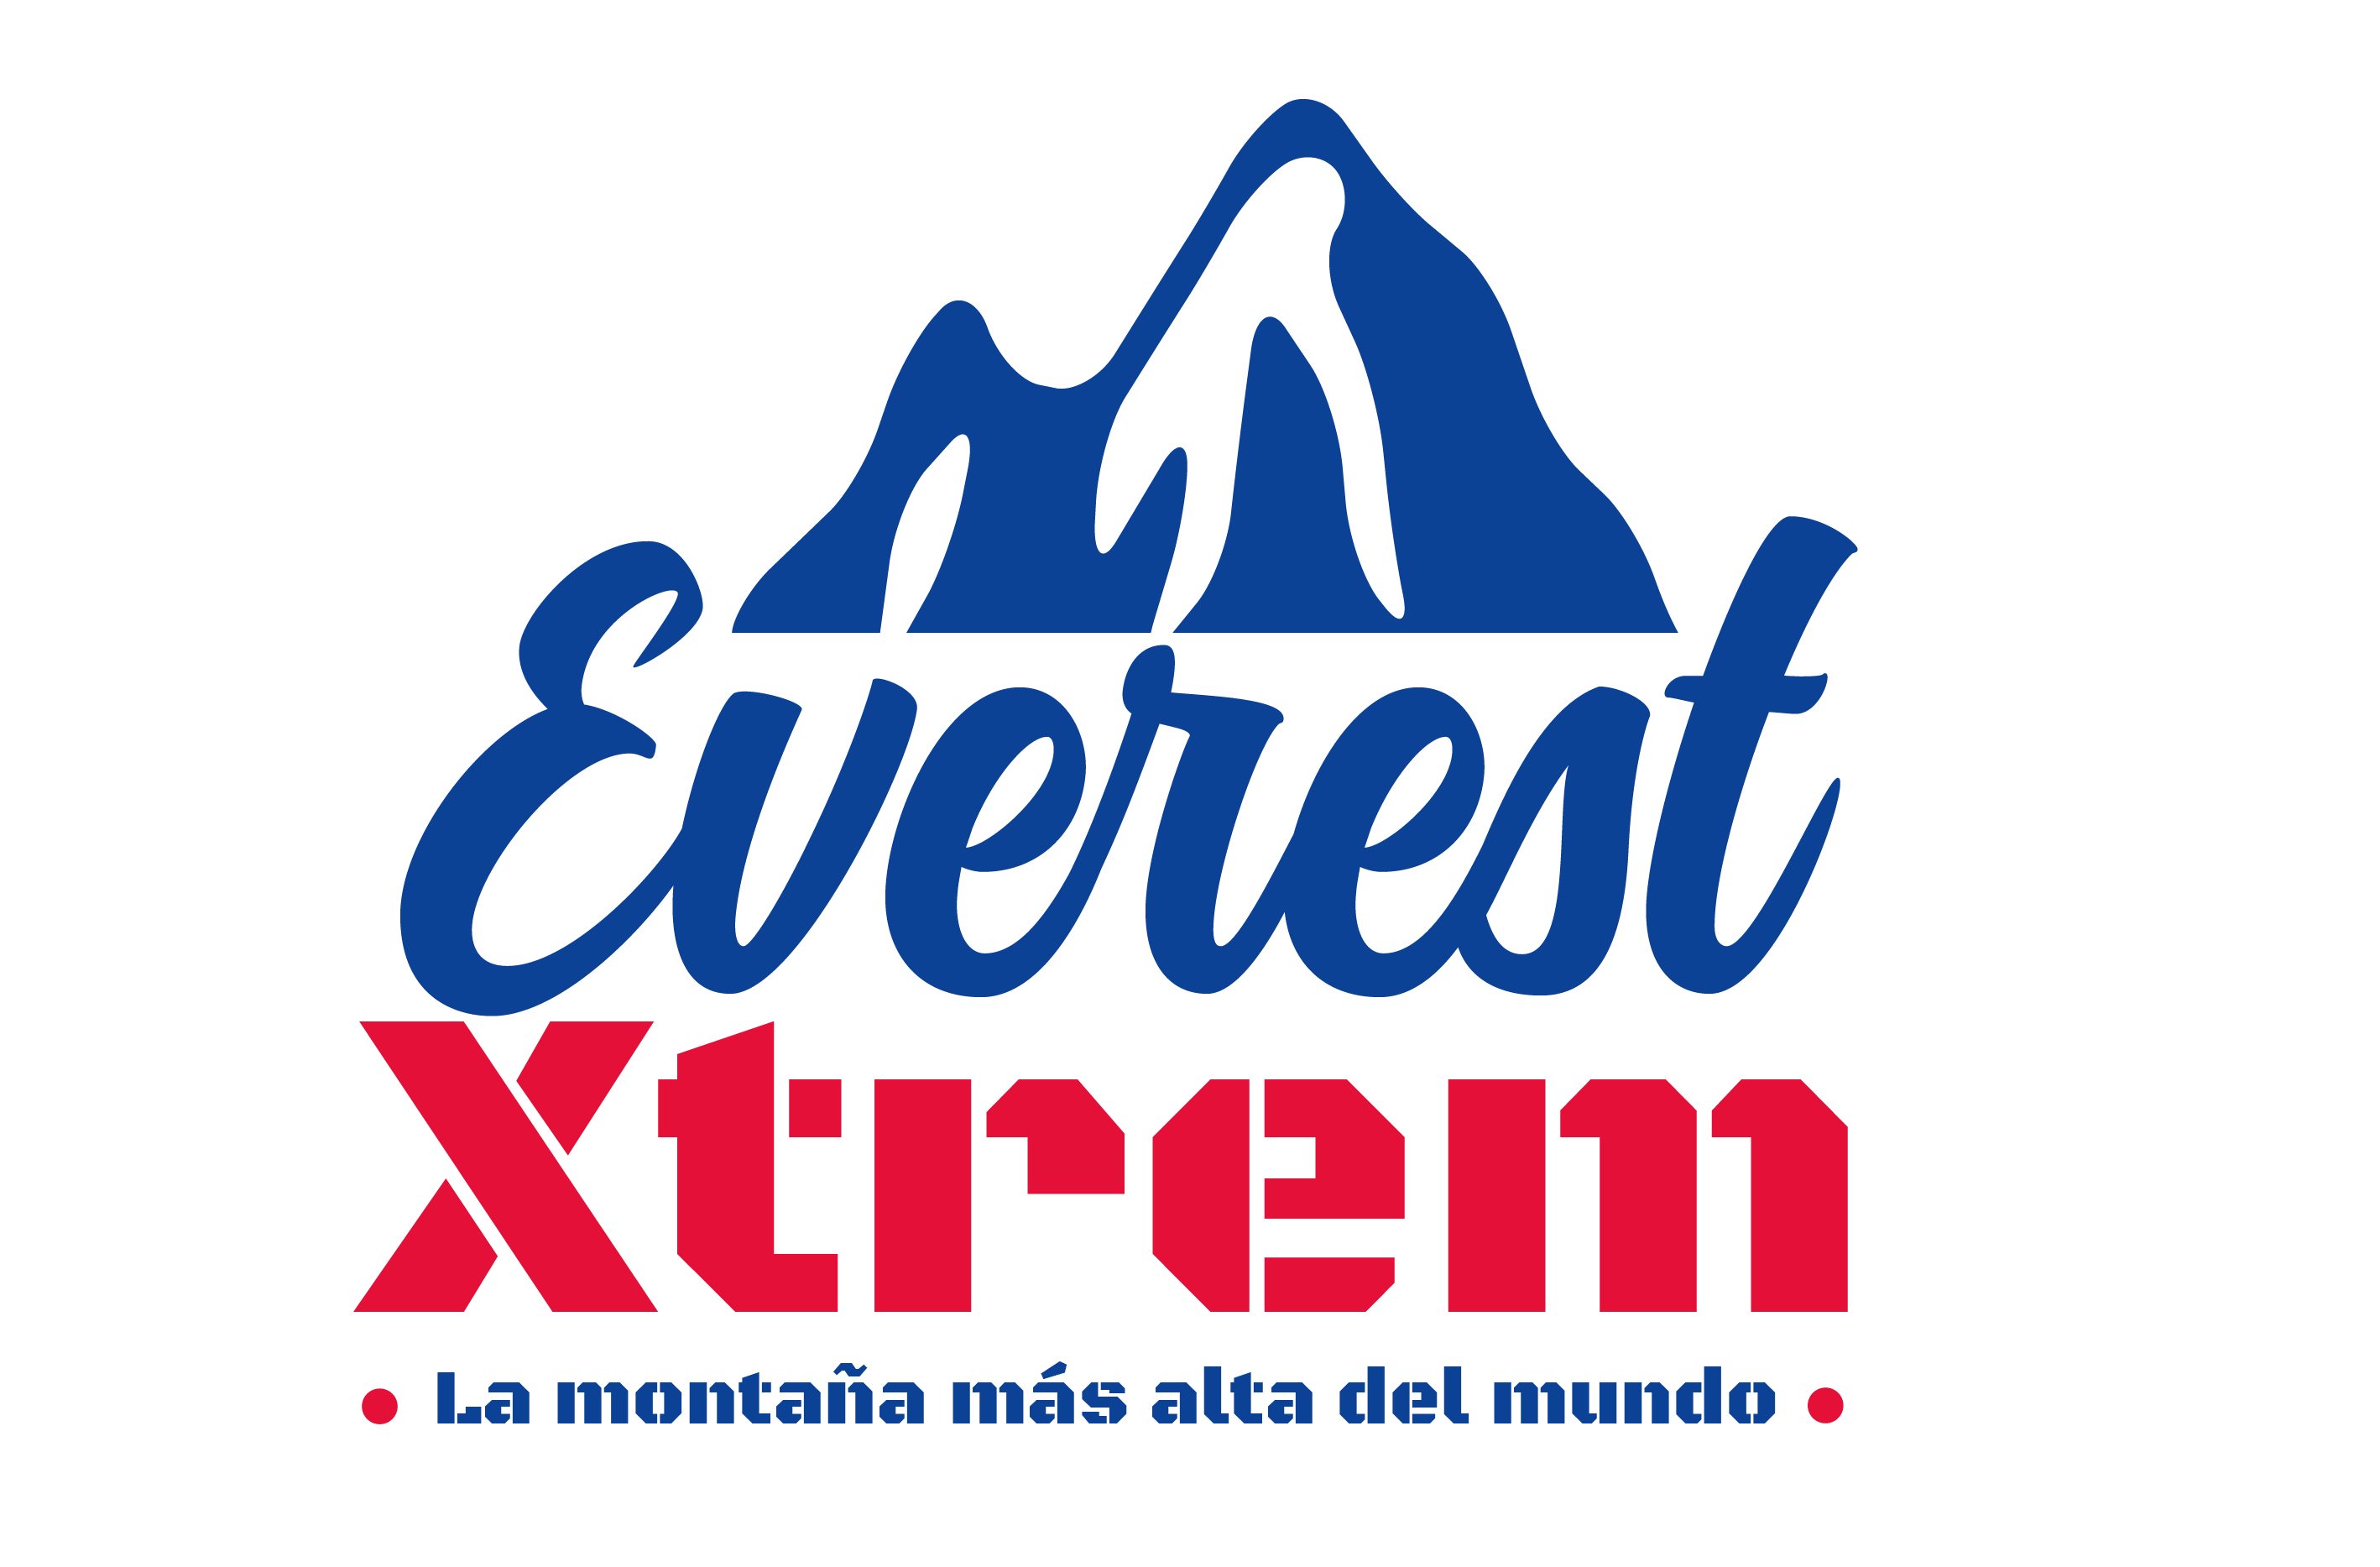 Everest Xtrem Escalada infinita Diverparke